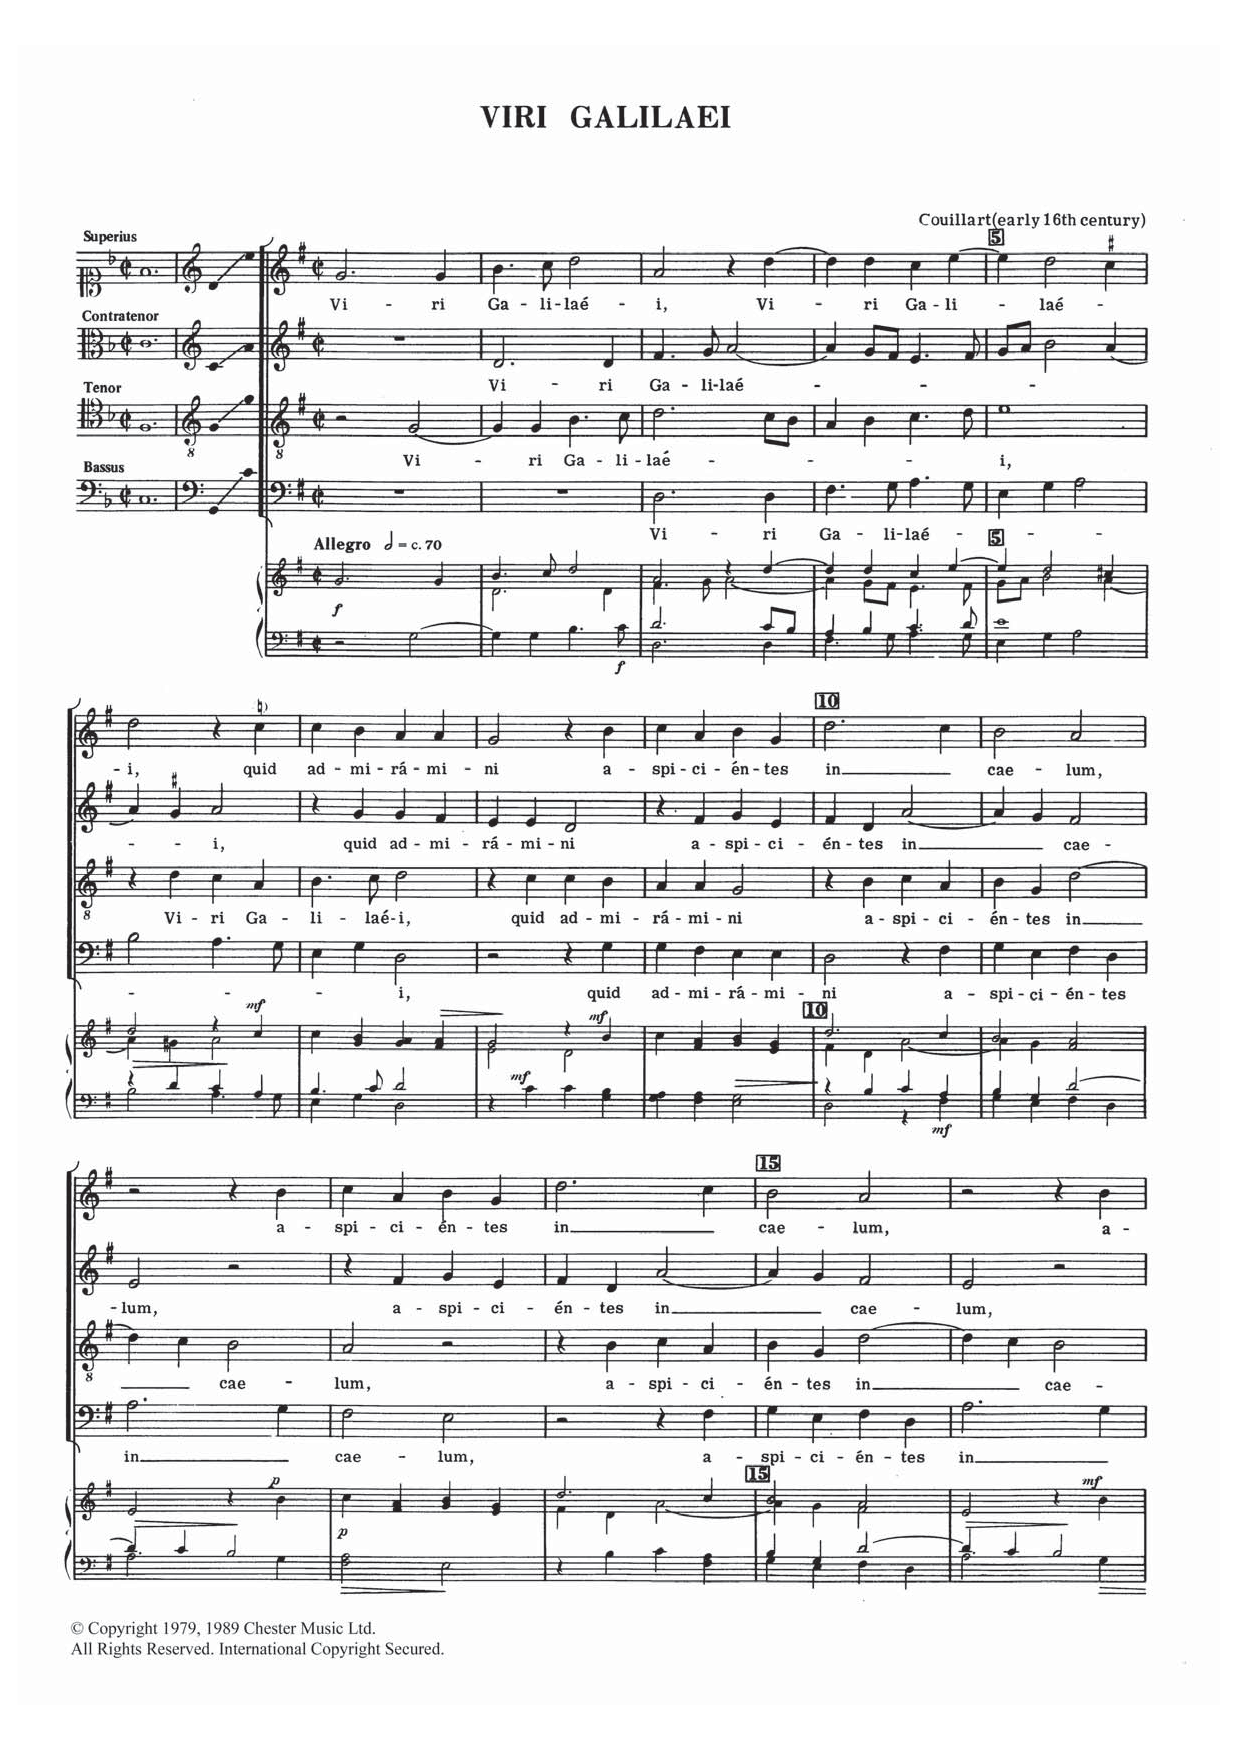 Dulos Couillart Viri Galilaei Sheet Music Notes & Chords for SATB - Download or Print PDF